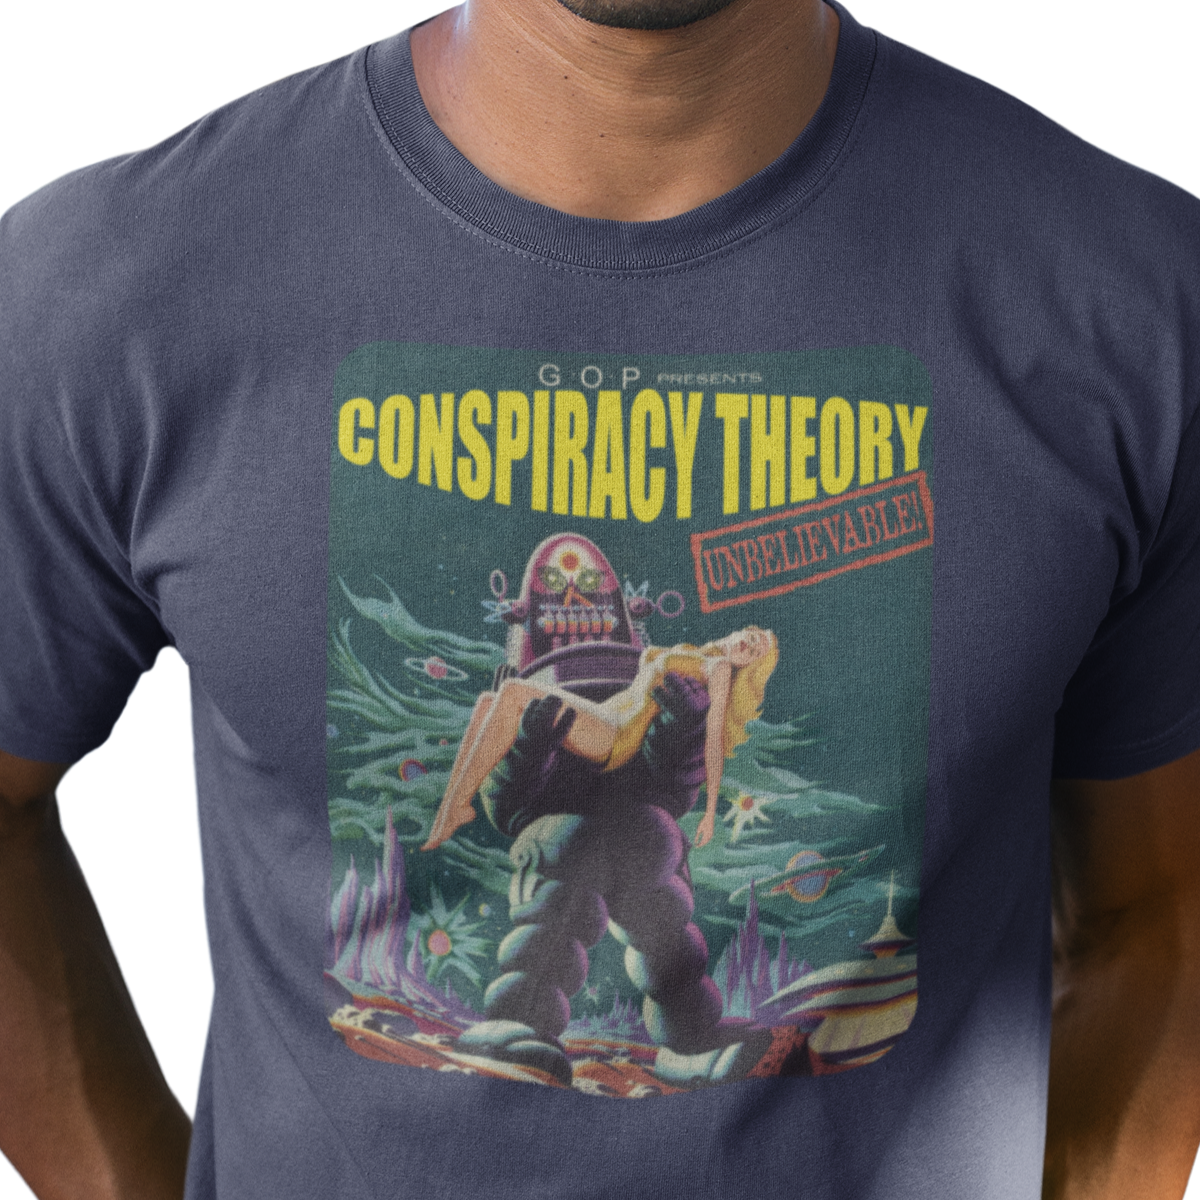 Conspiracy theory t-shirt